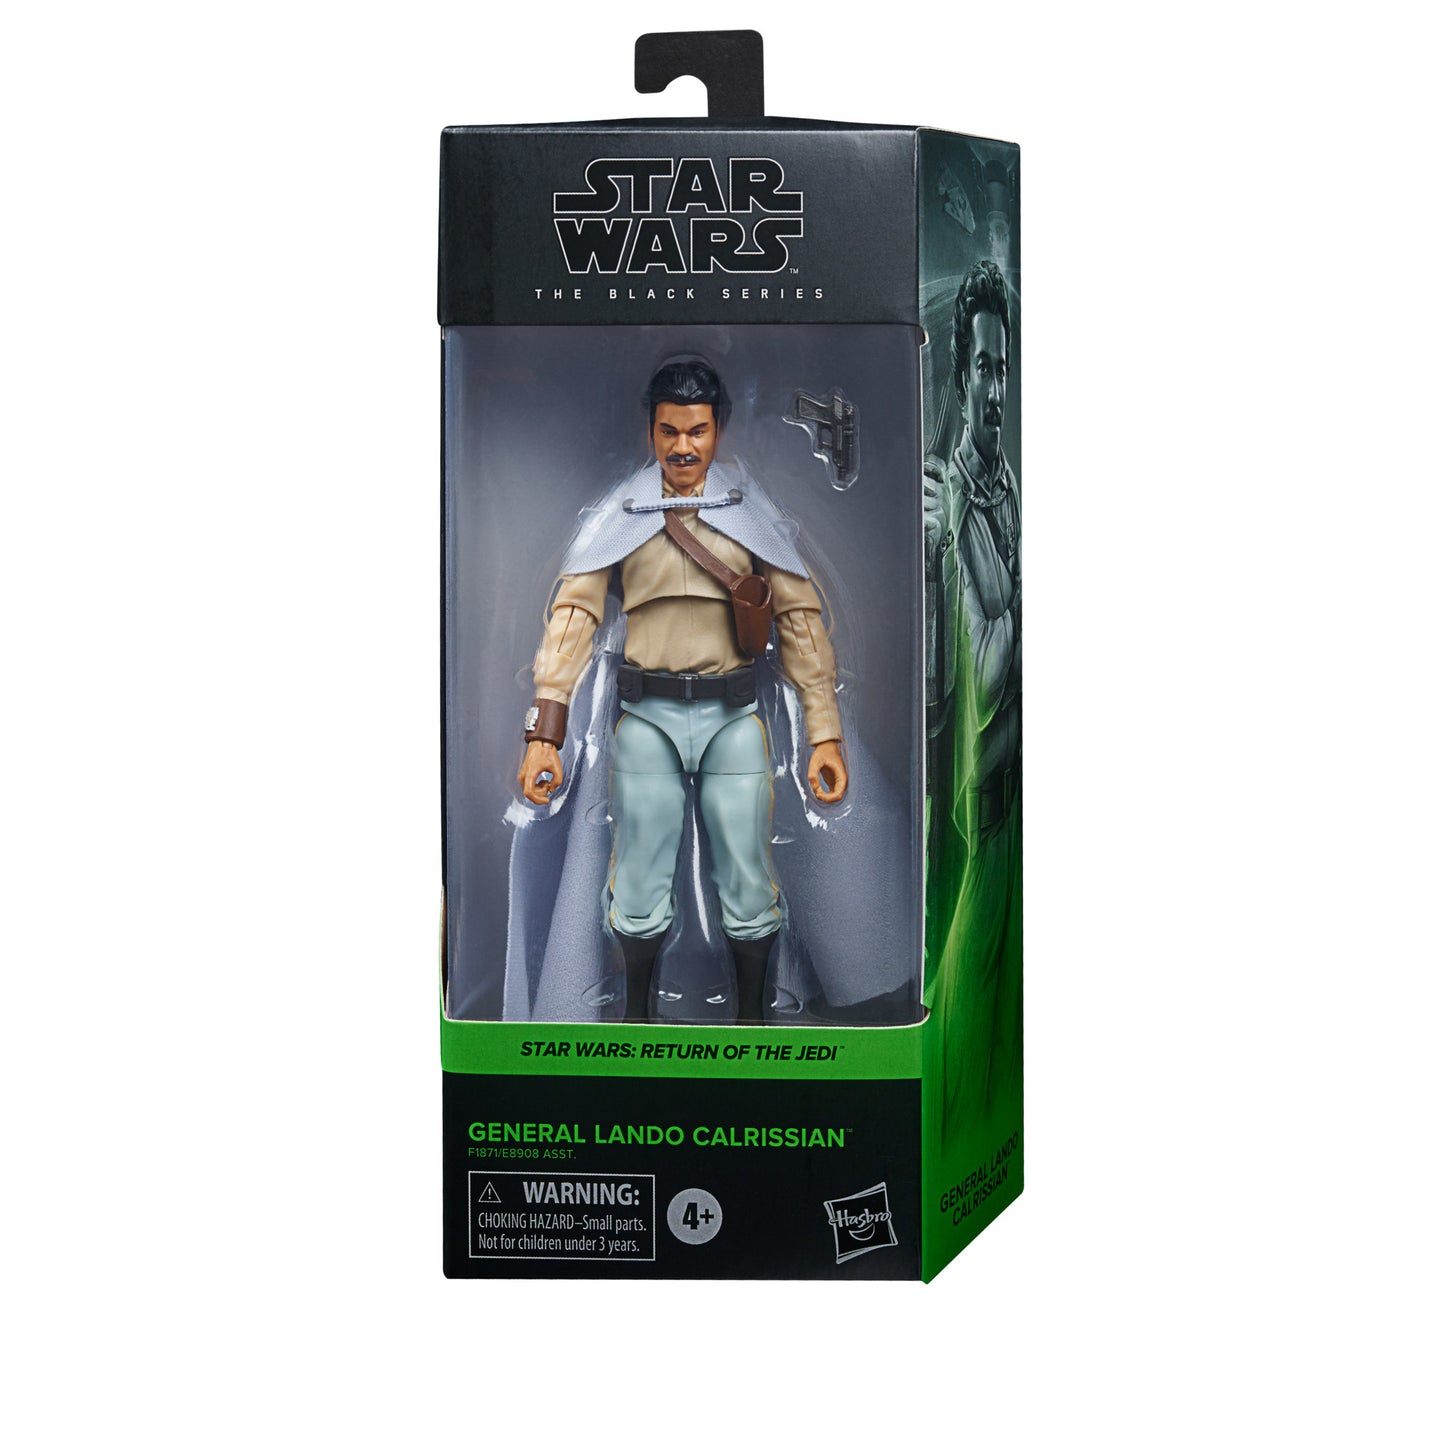 Star Wars General Lando Calrissian Black Series action figure